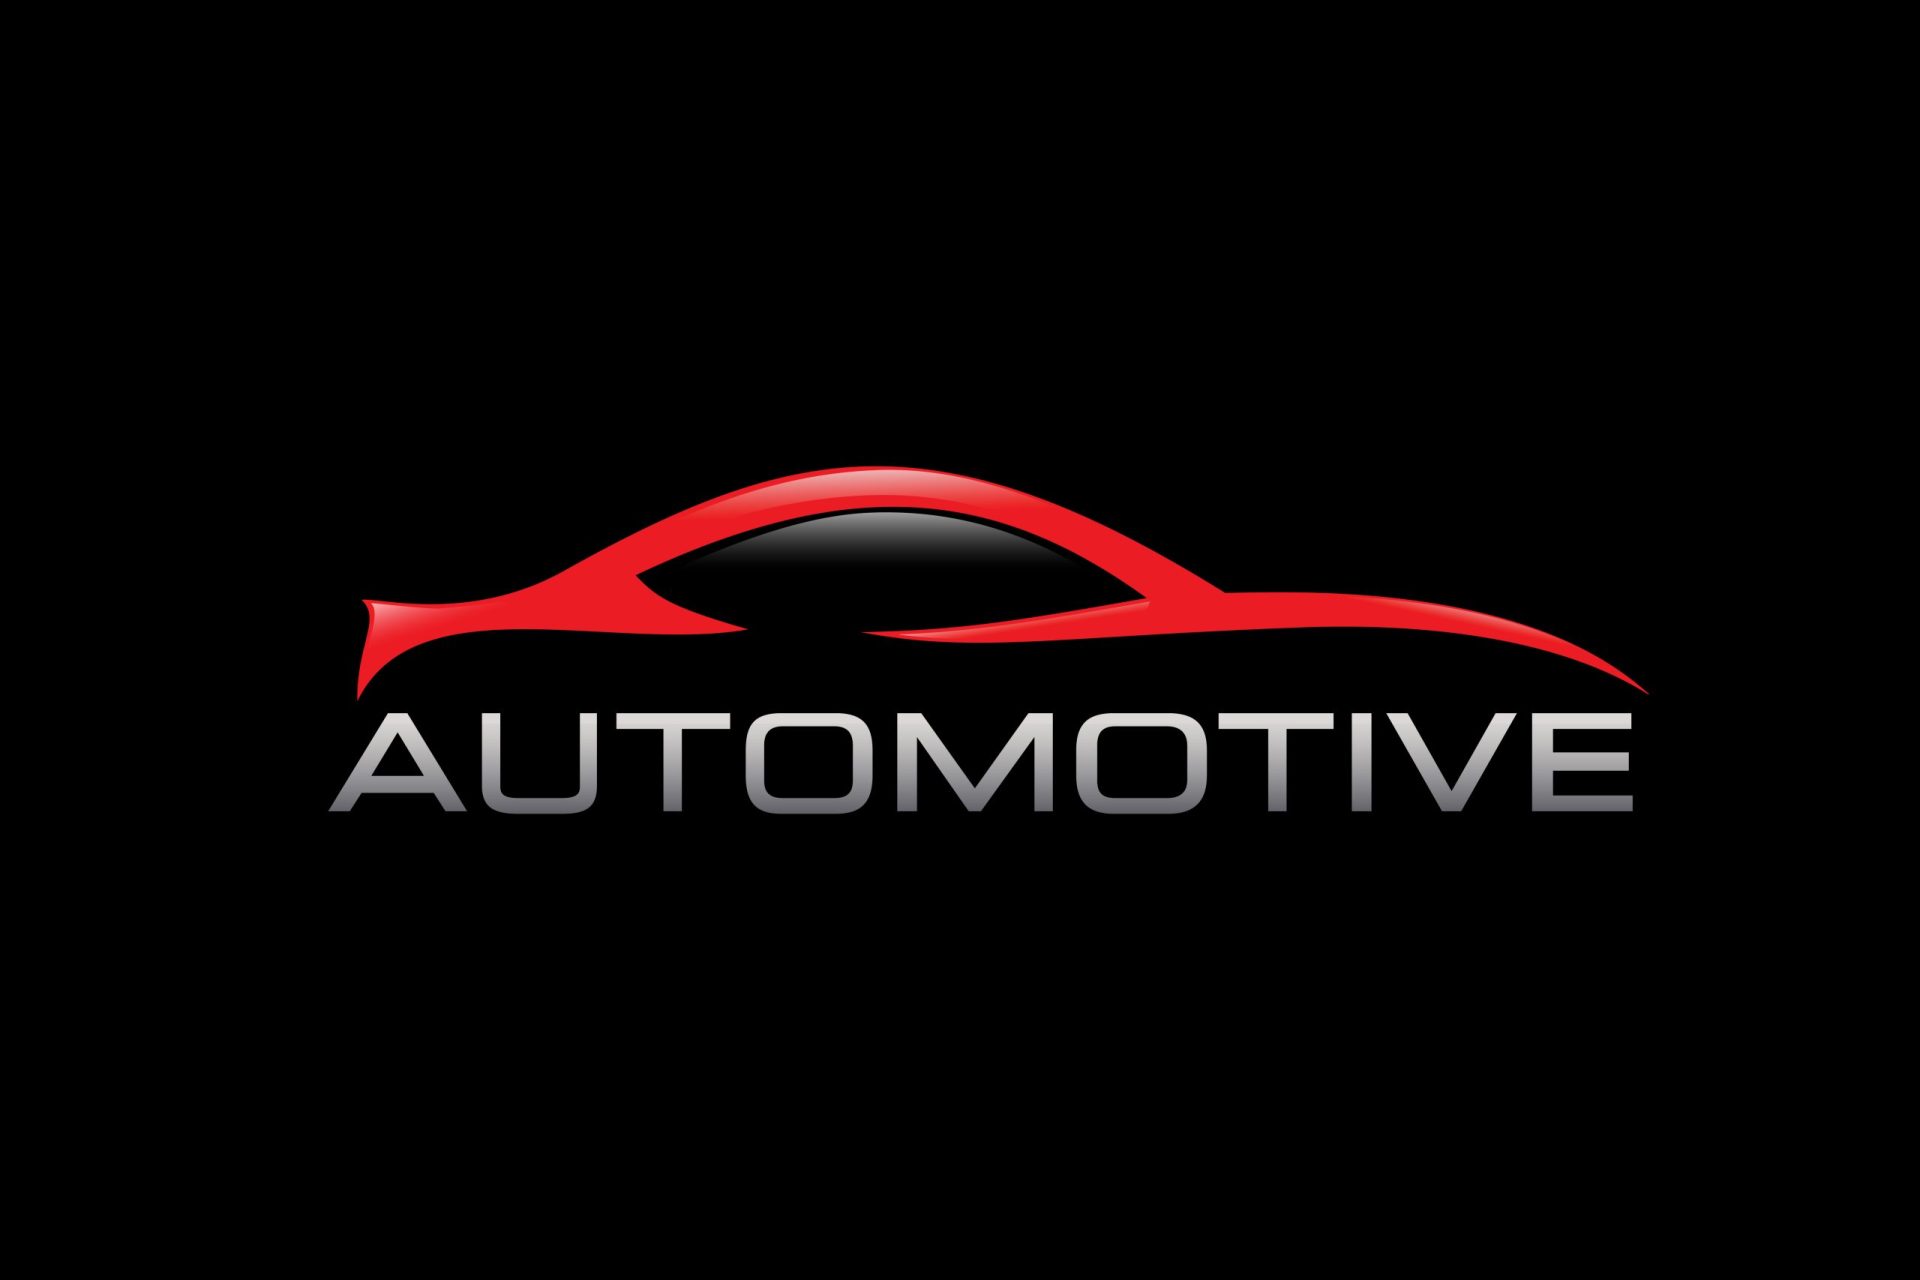 automotive logo ideas 1